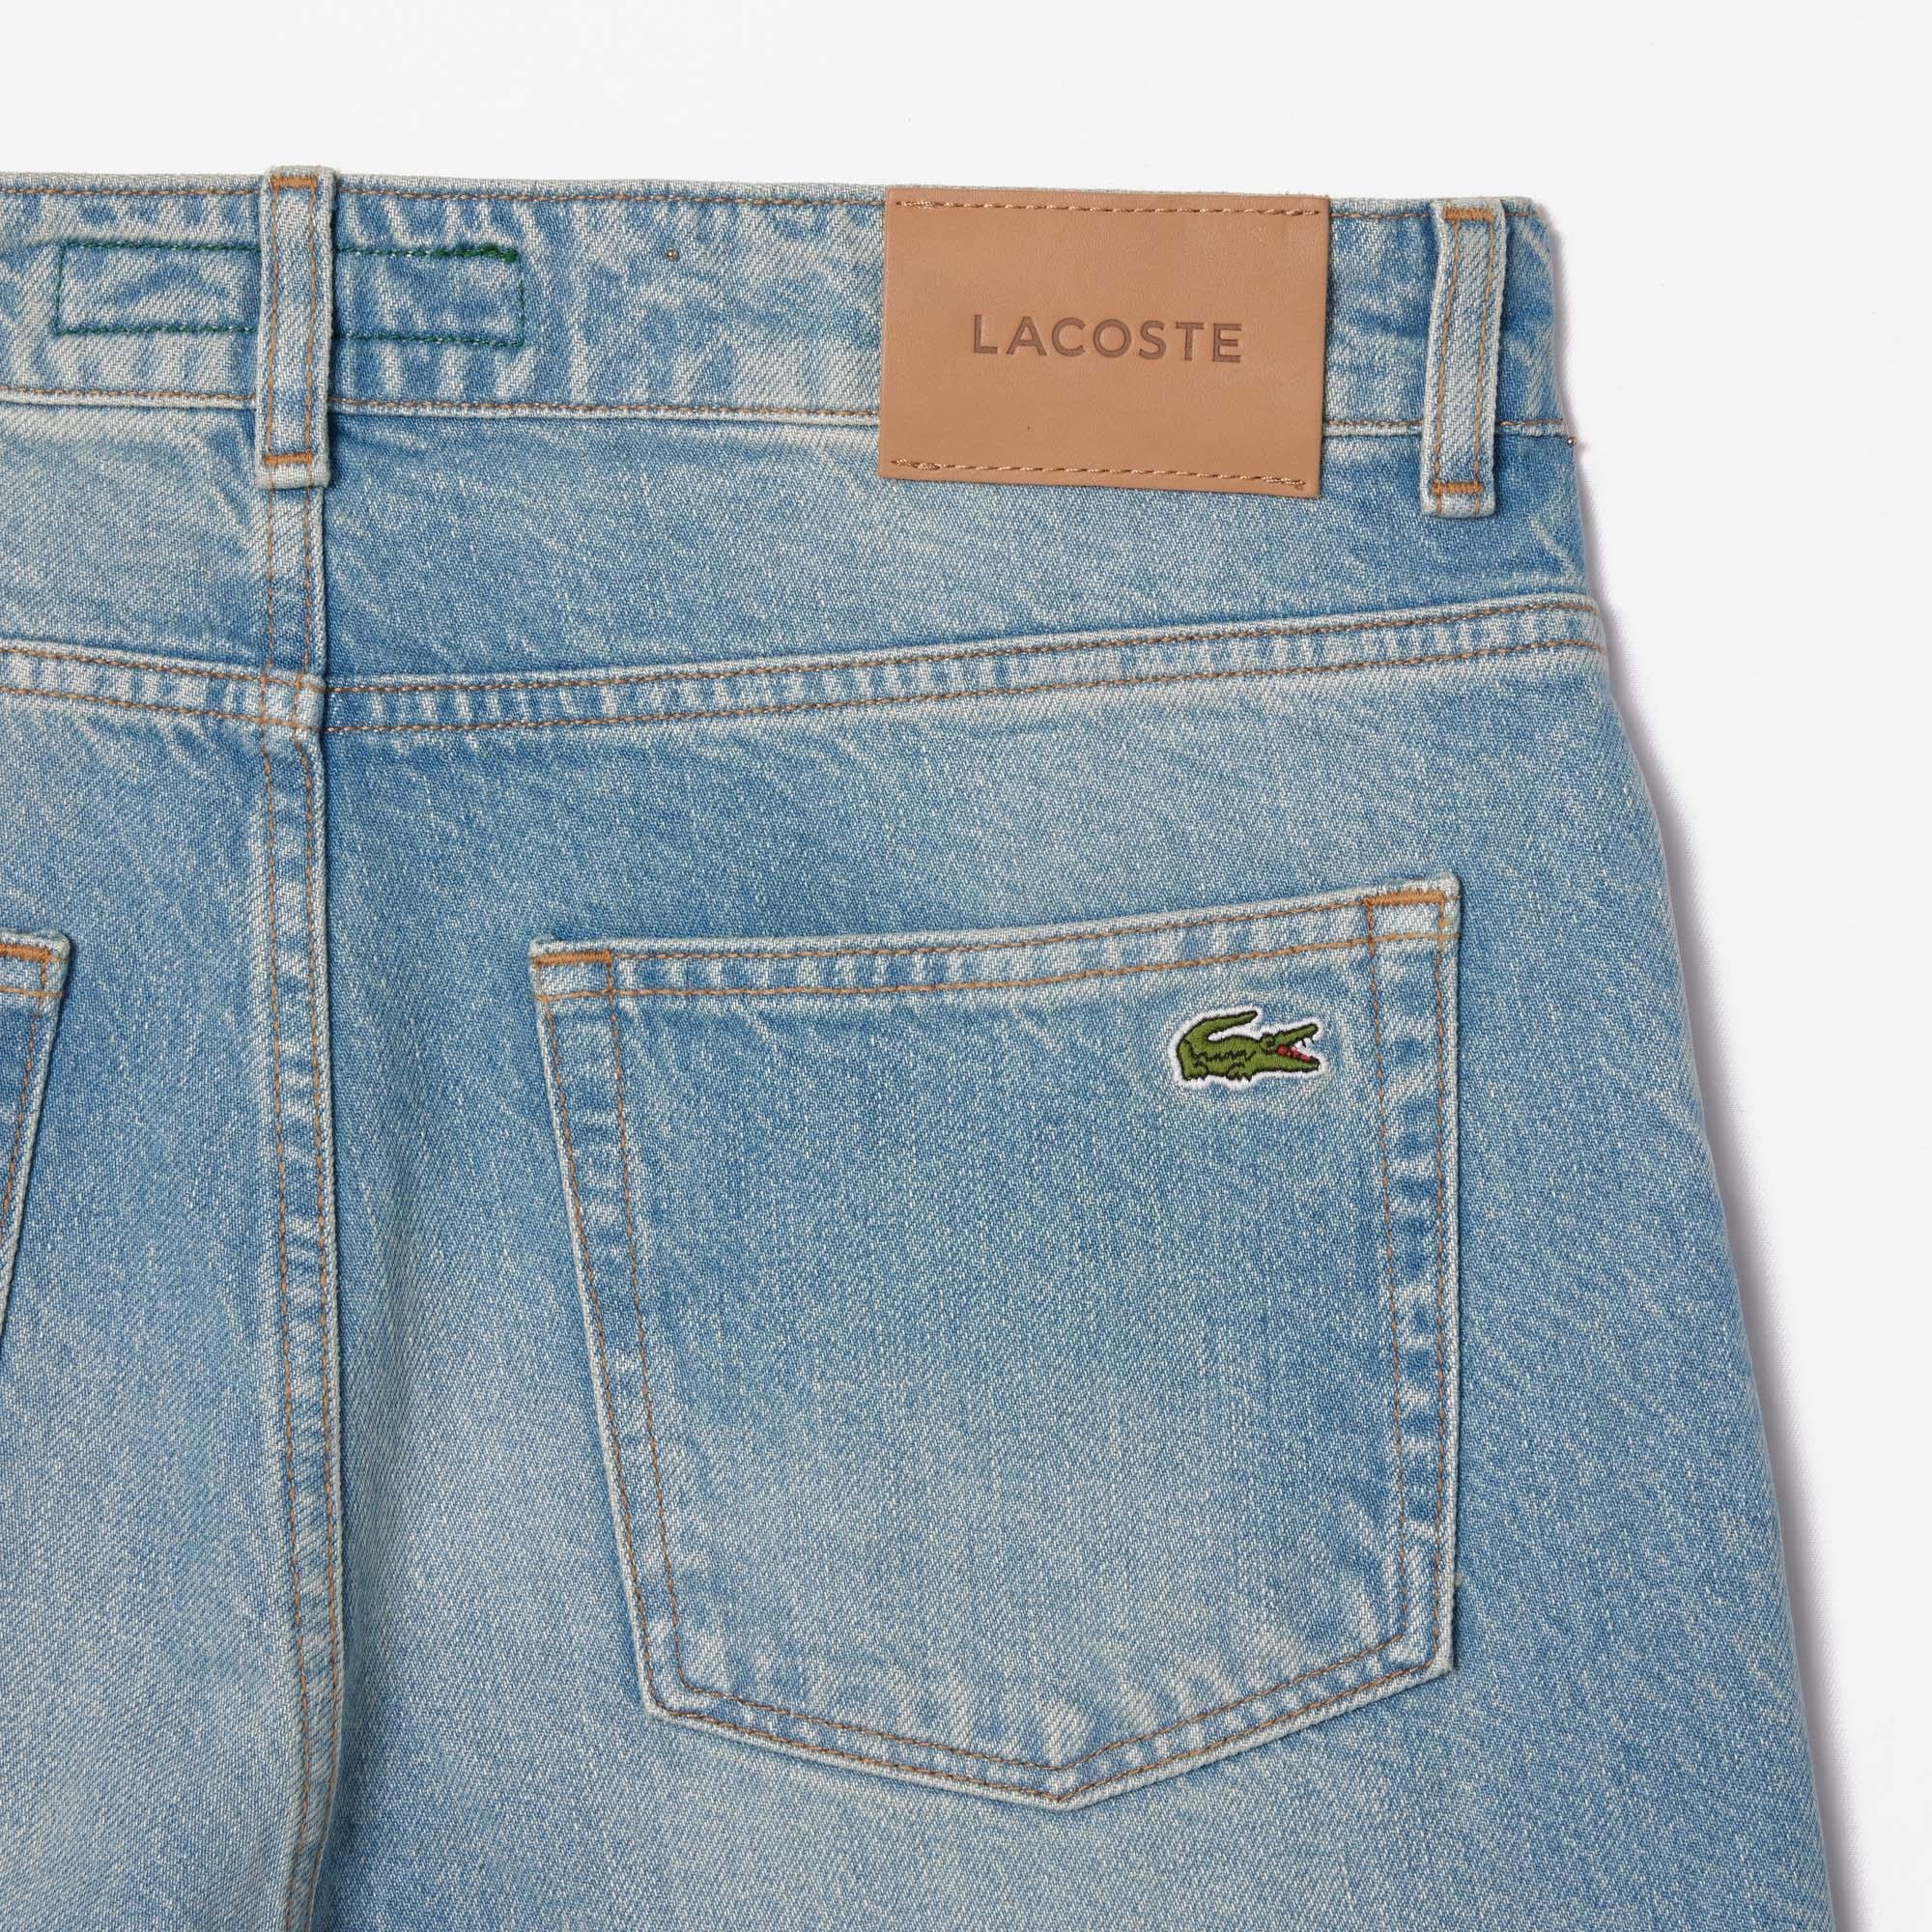 Lacoste Men's 5 Pocket Straight Cut Indigo Jeans